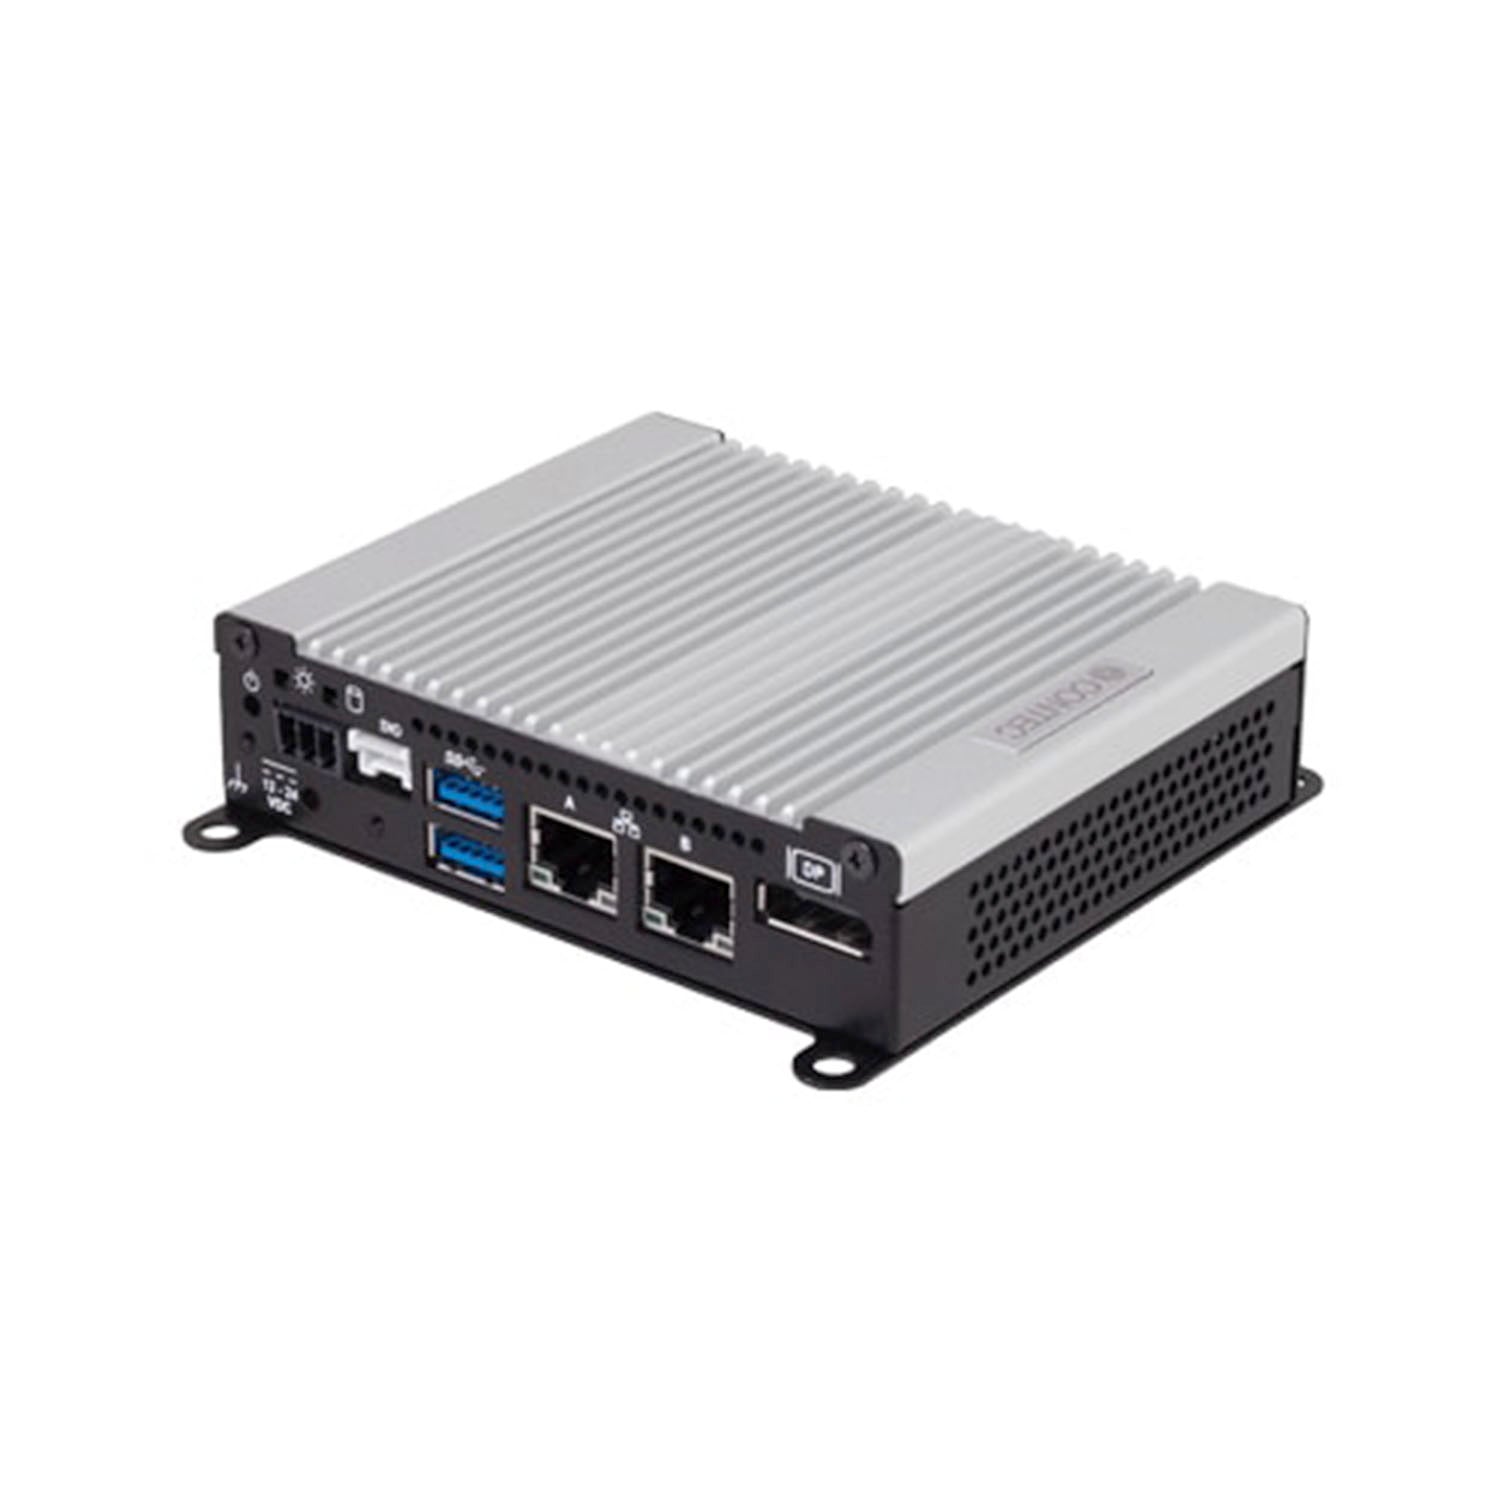 BX-U200 - Fanless Embedded PC / Ultra small design / Atom x5-E3940 (Apollo Lake)